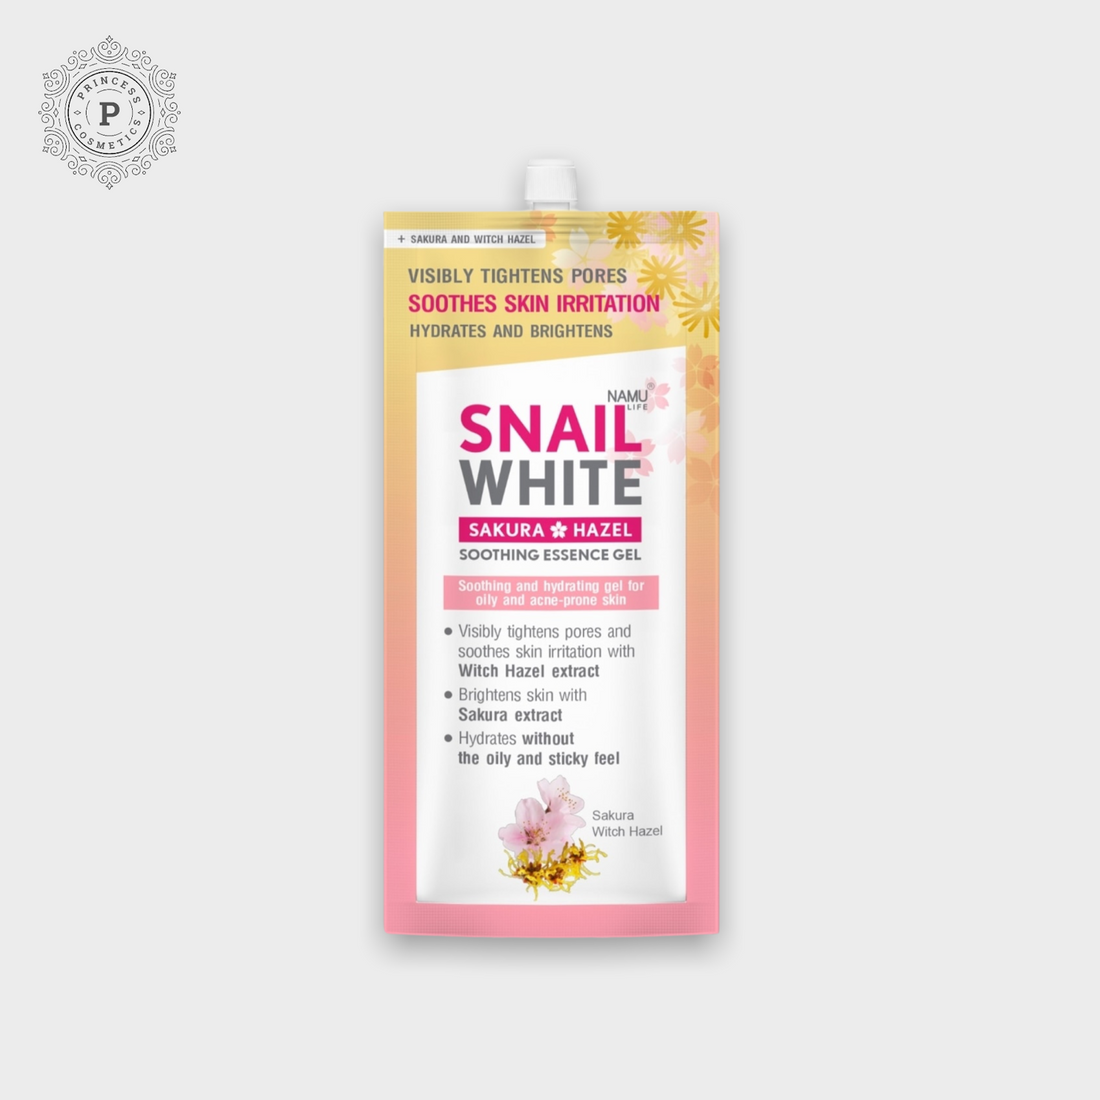 Namu Life Snail White Sachet (1 SACHET)